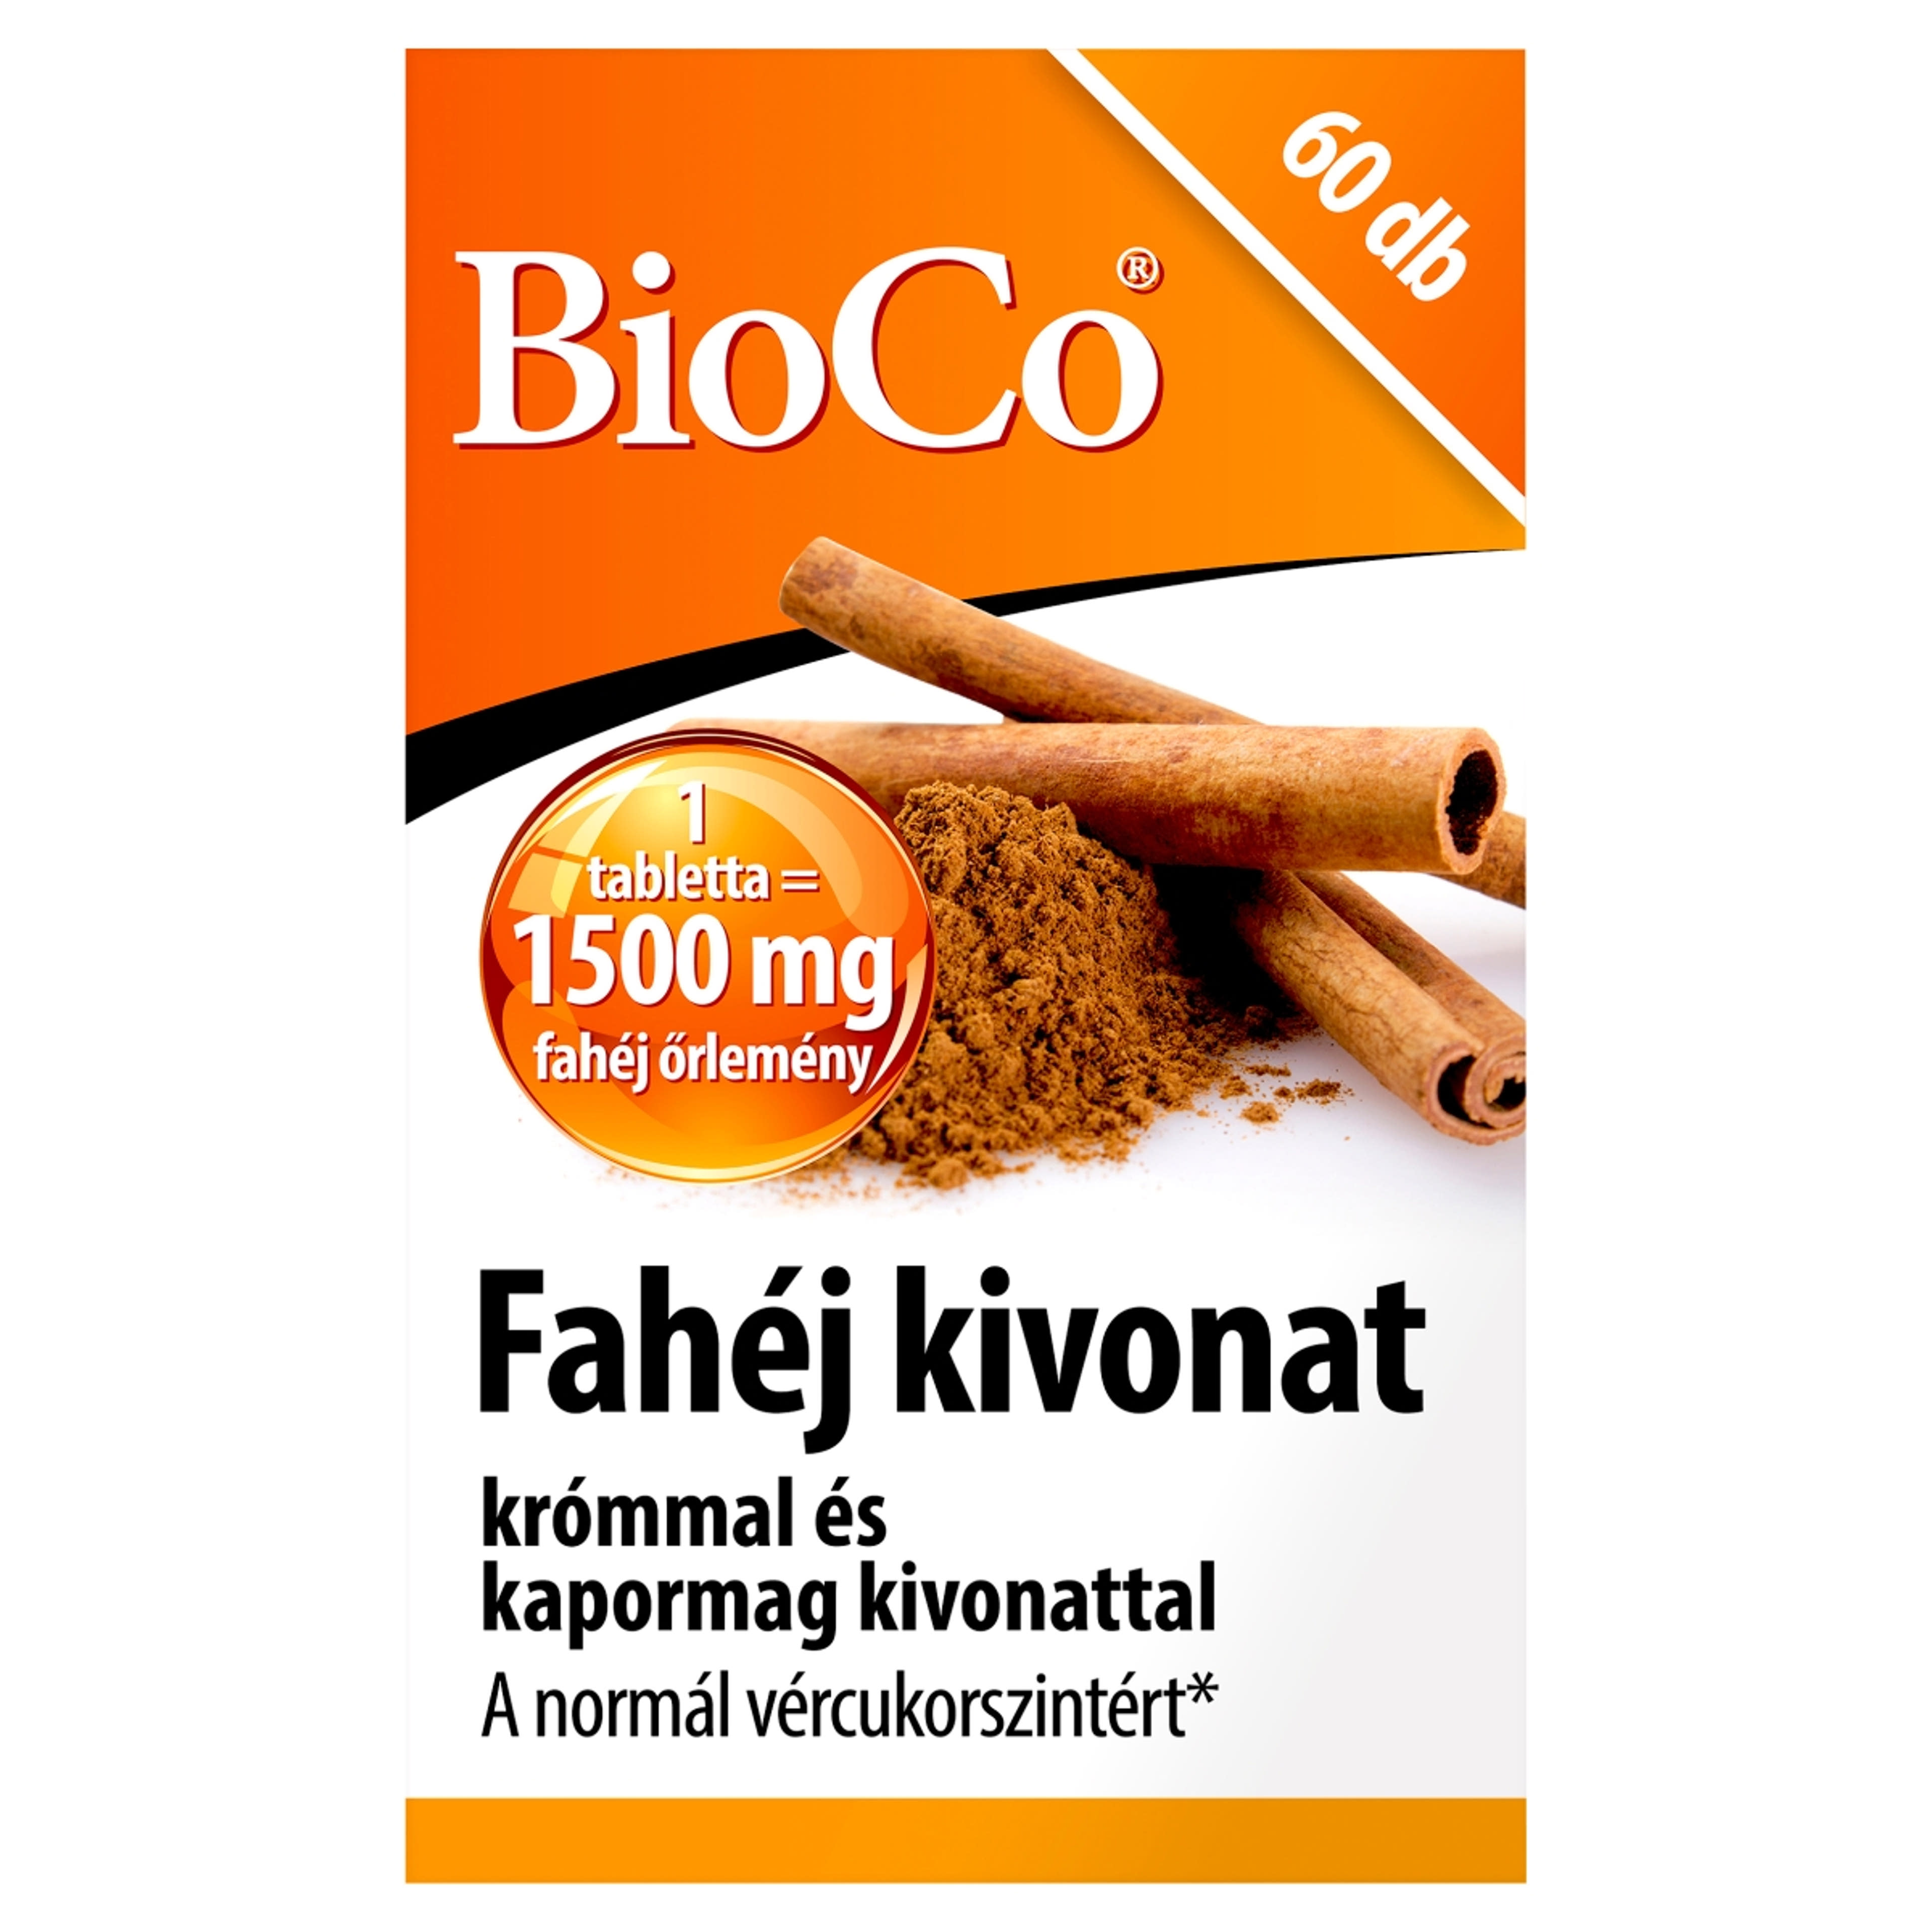 Biocon Fahéj kivonat étrenkiegészítő tabletta - 60 db